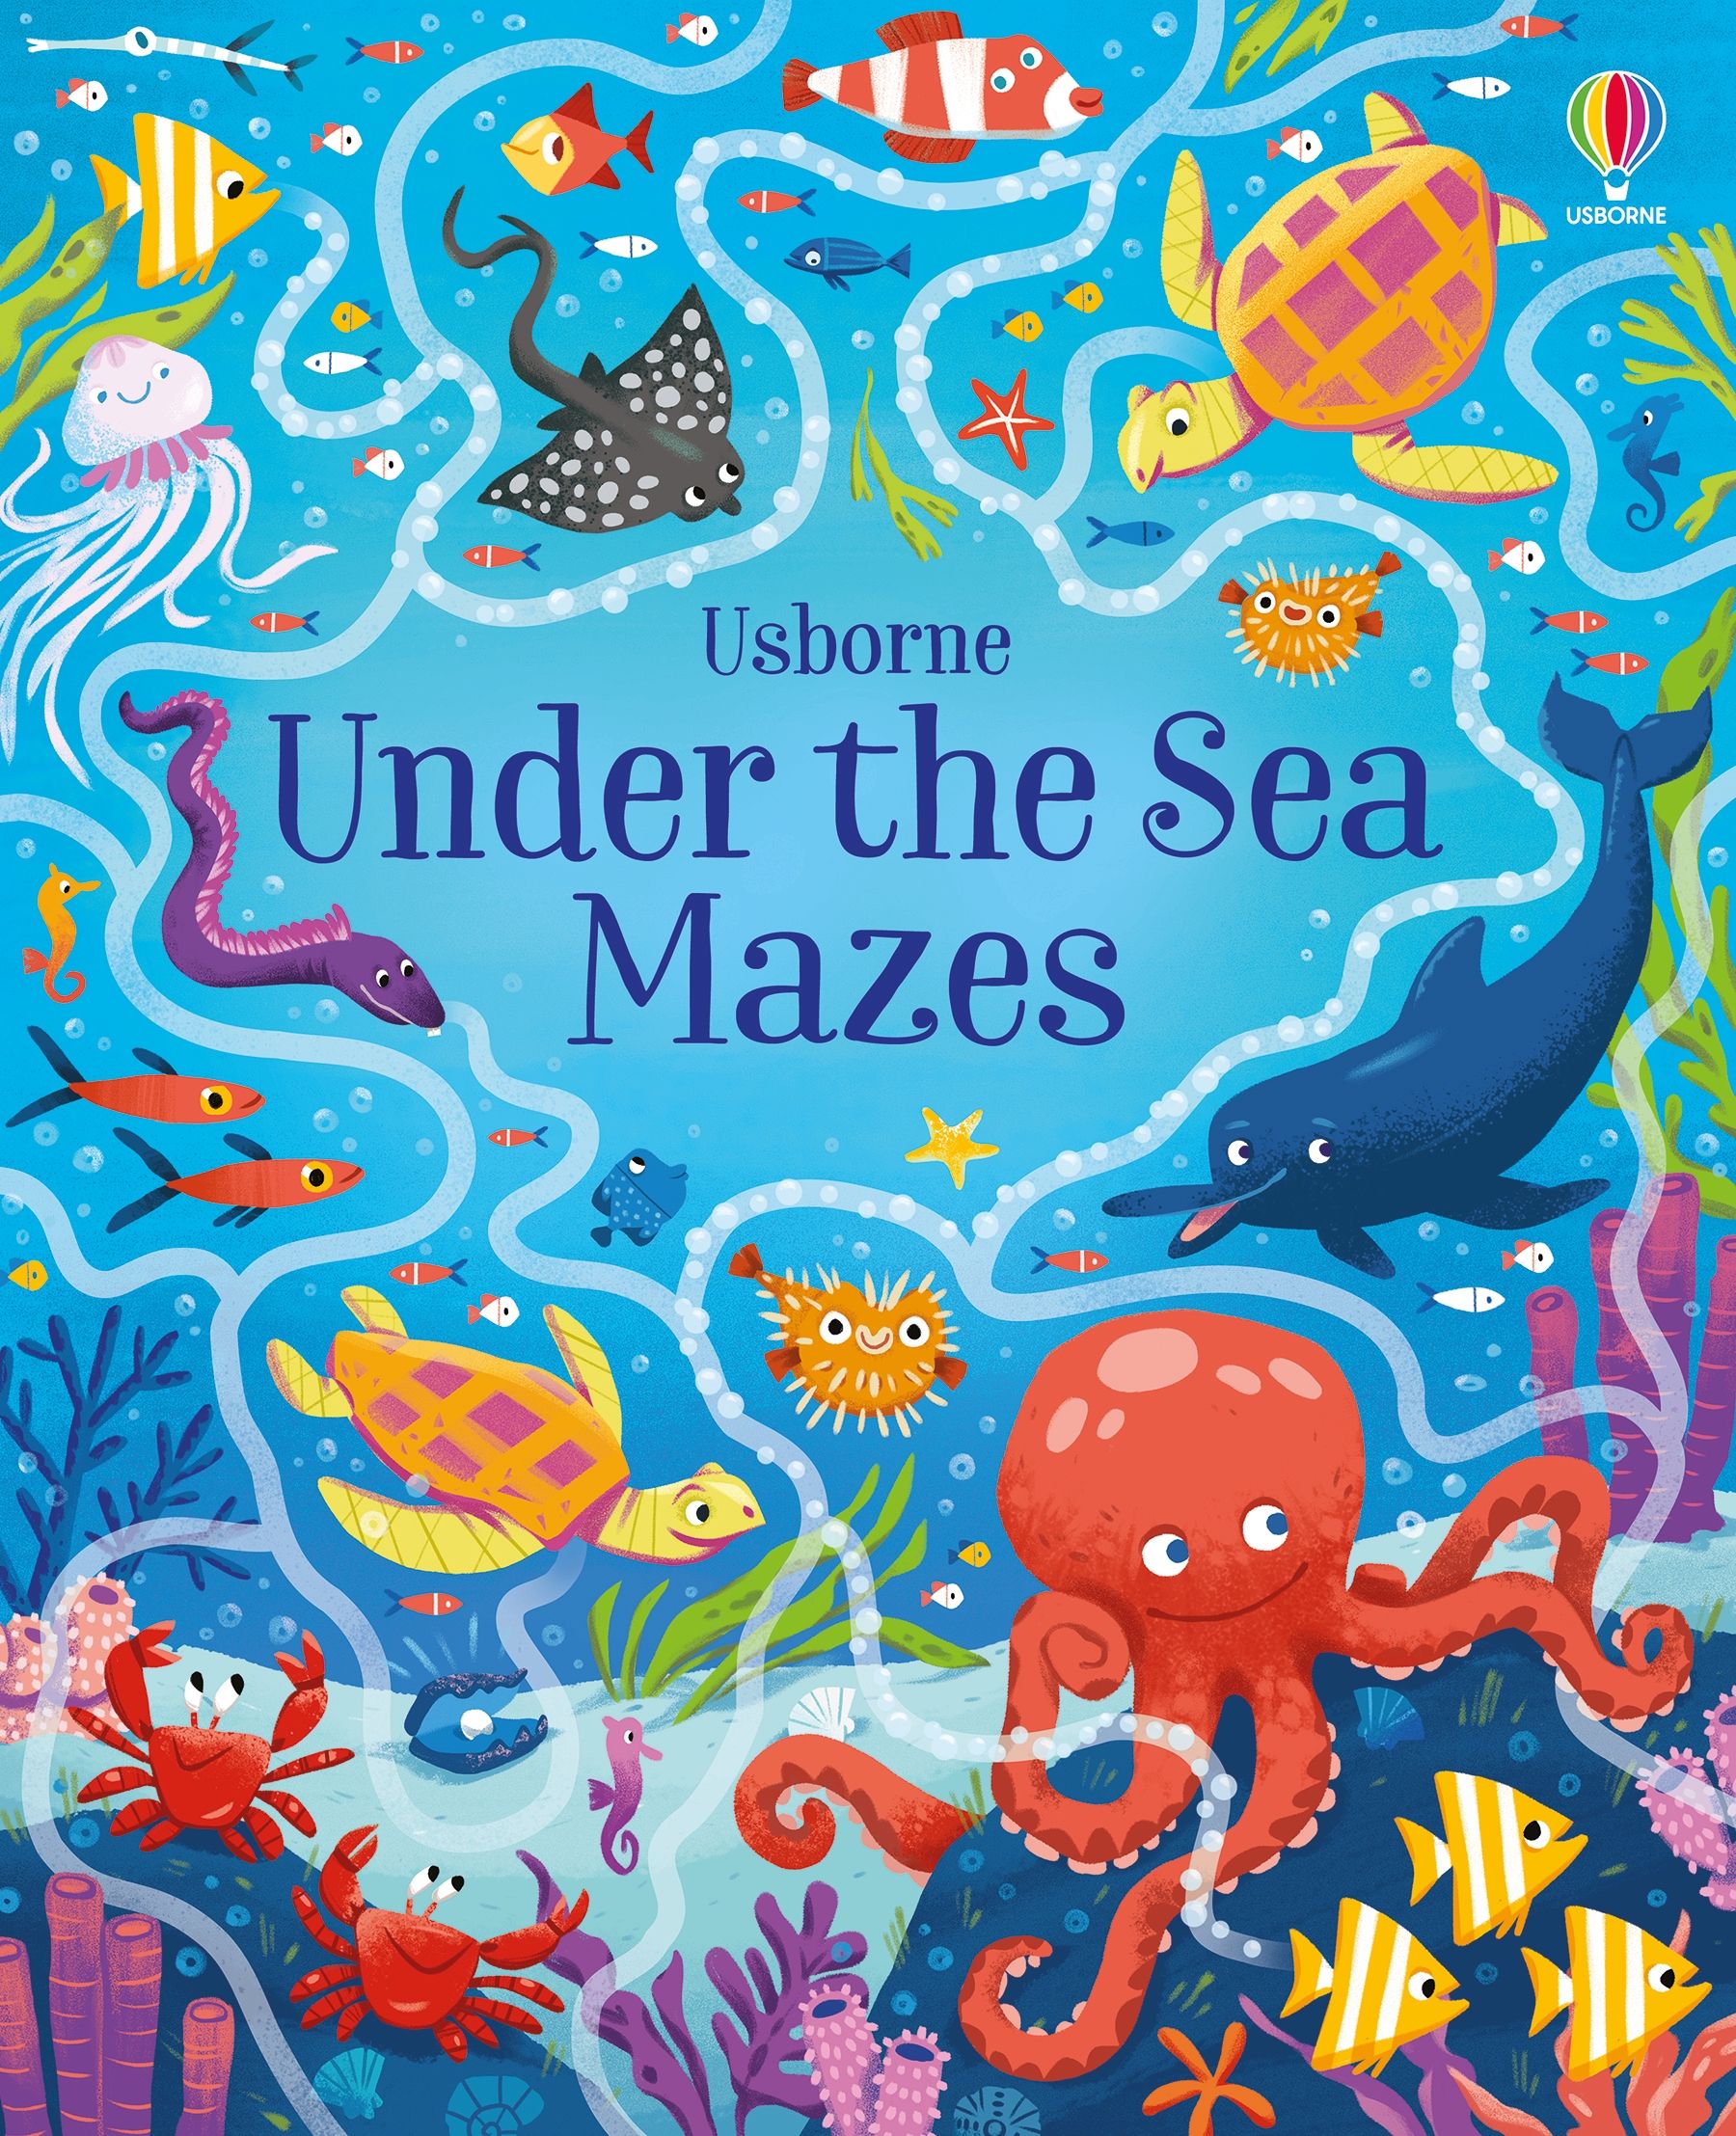 Usborne Under the Sea Mazes